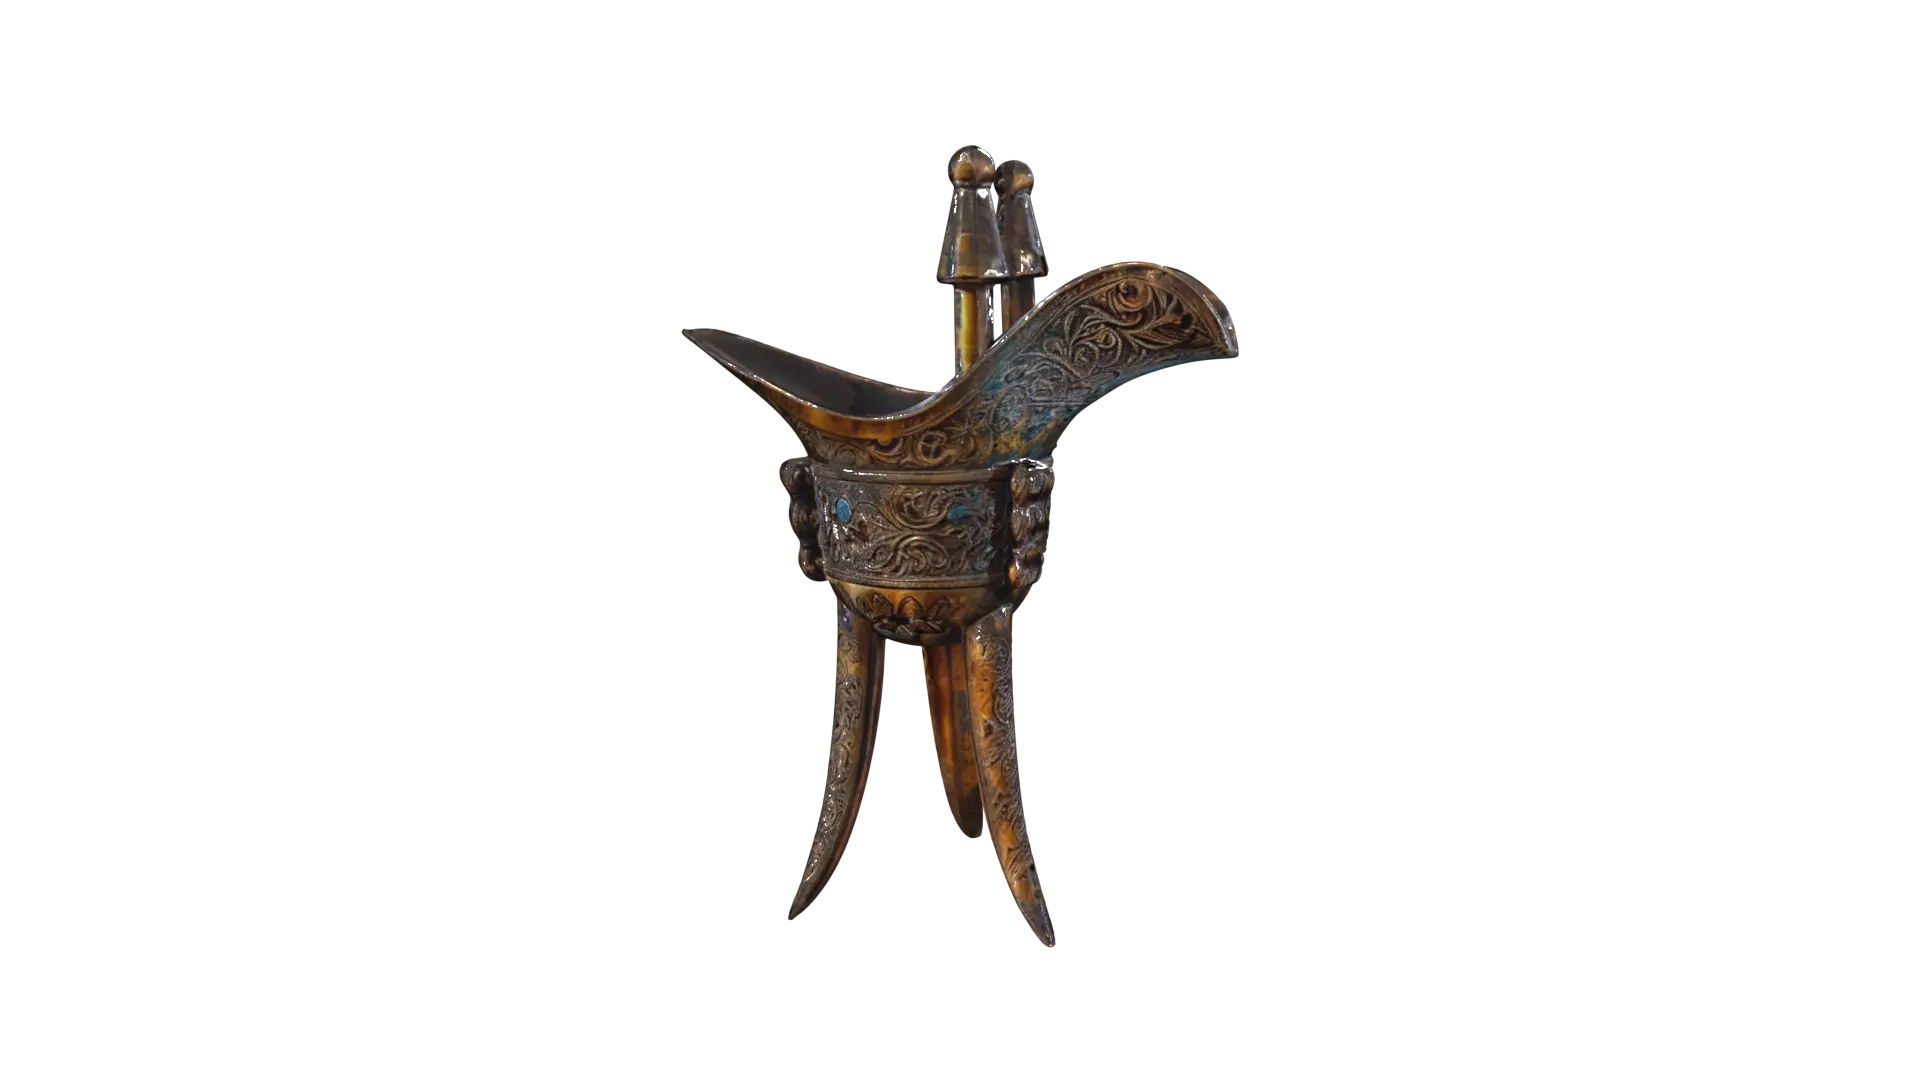 A bronze ware, ancient, antique